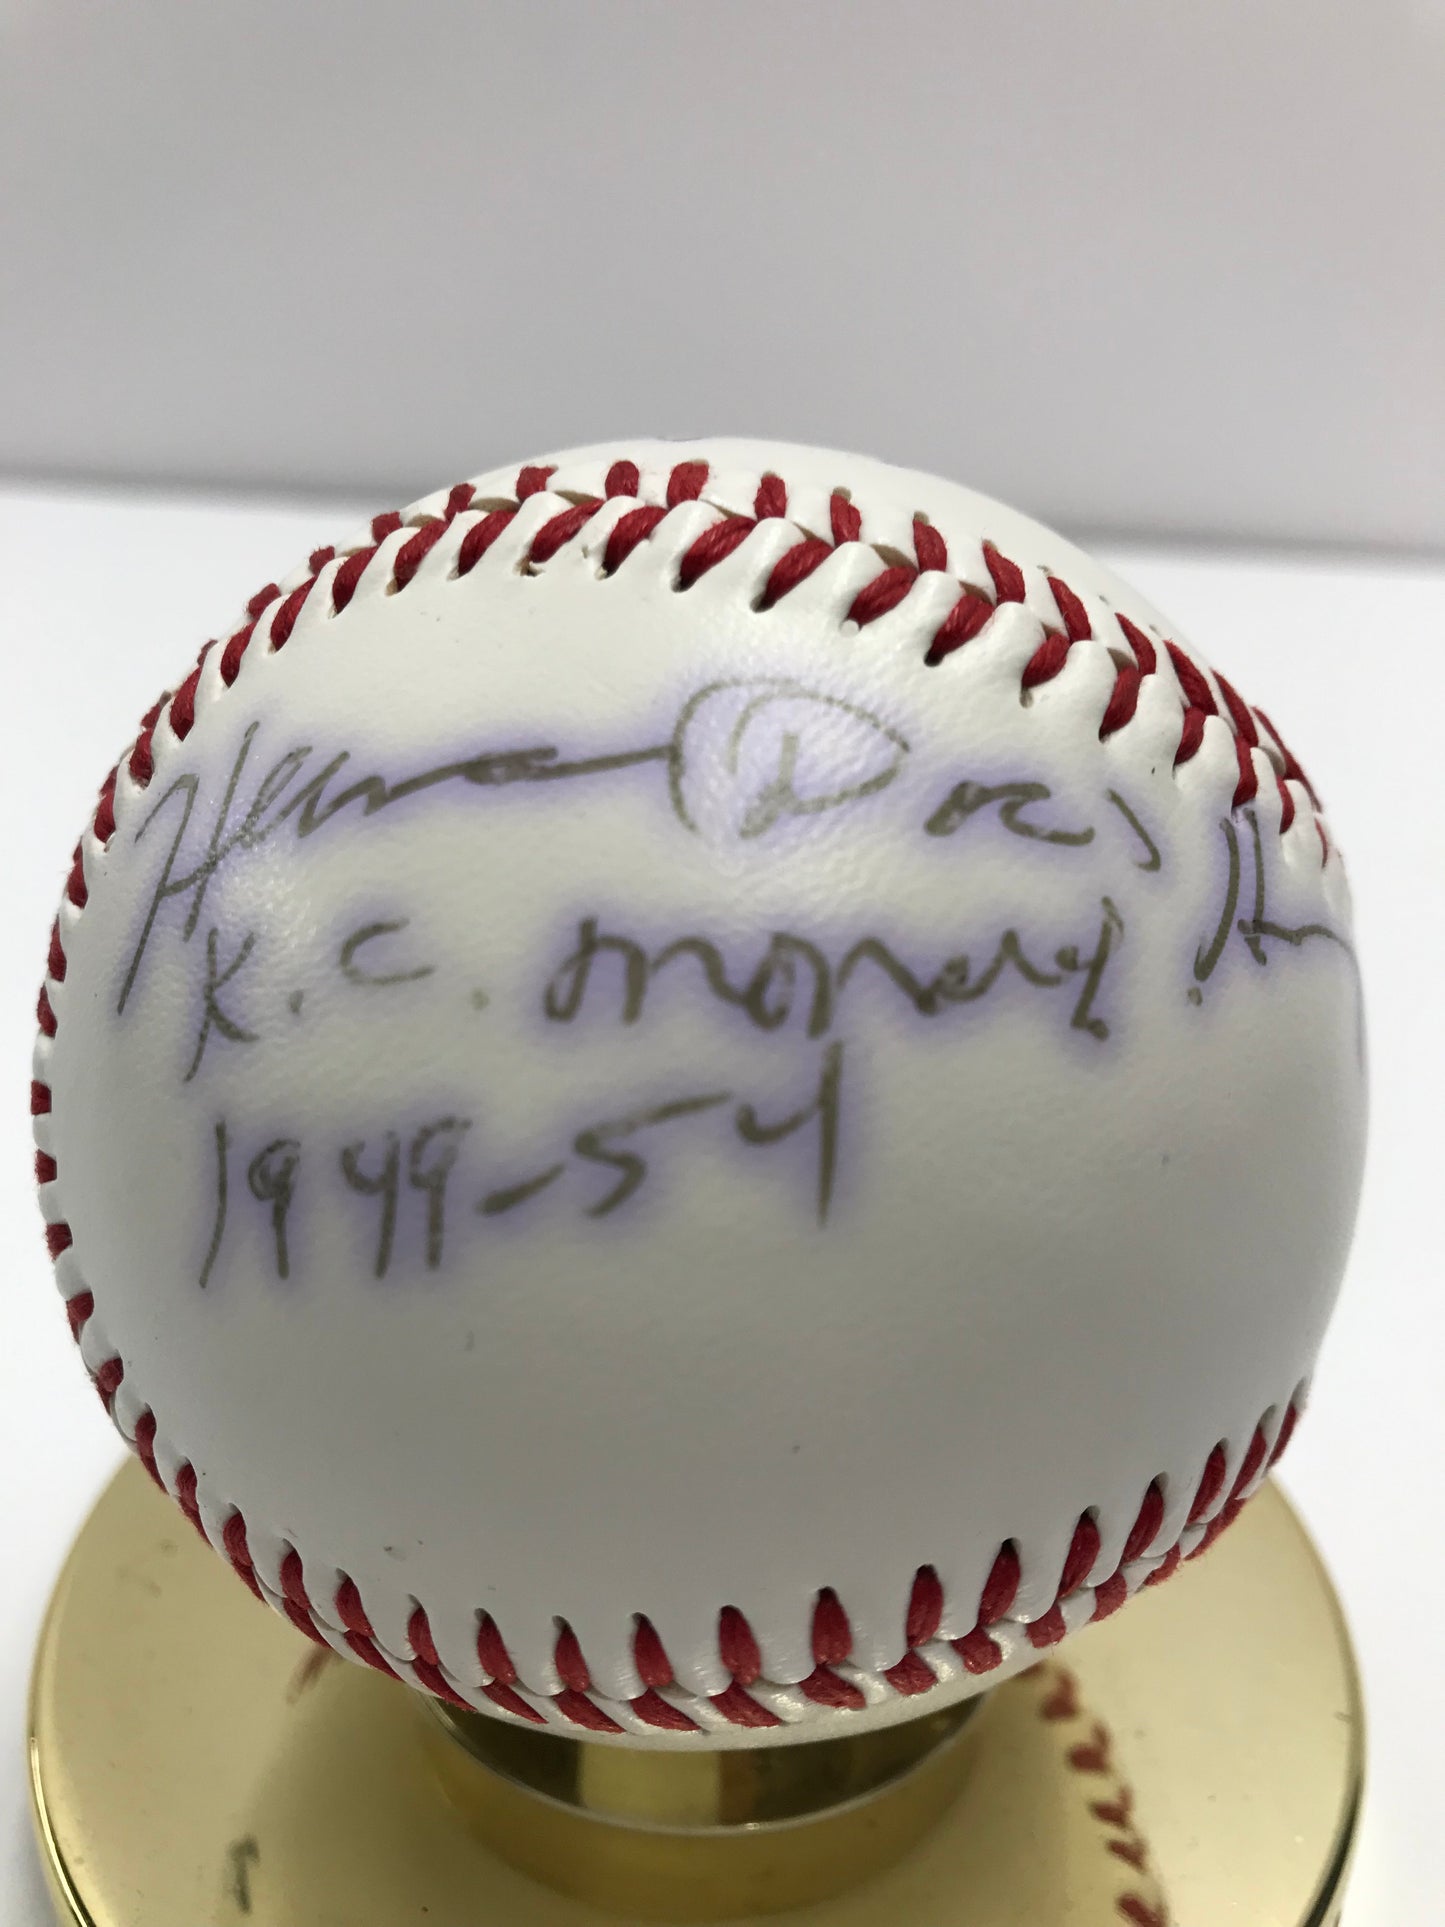 Buck O'Neil and Herman Doc Horn Autographed Baseball